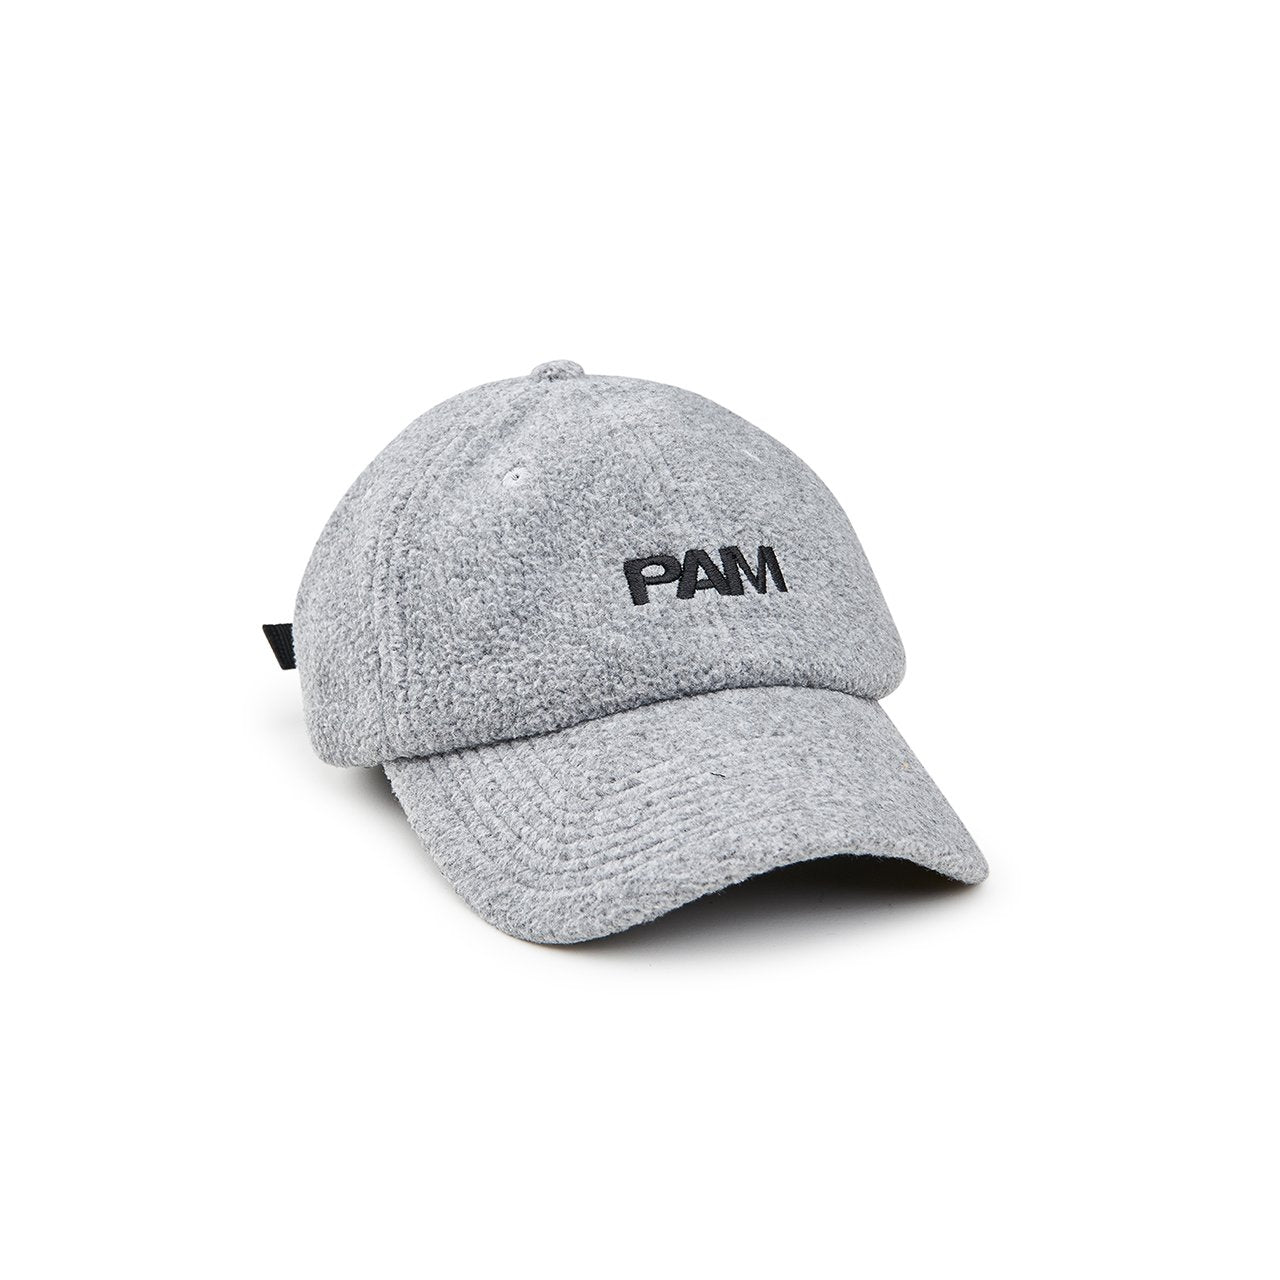 perks and mini perks and mini polartec logo cap (grey) 9709-A-G